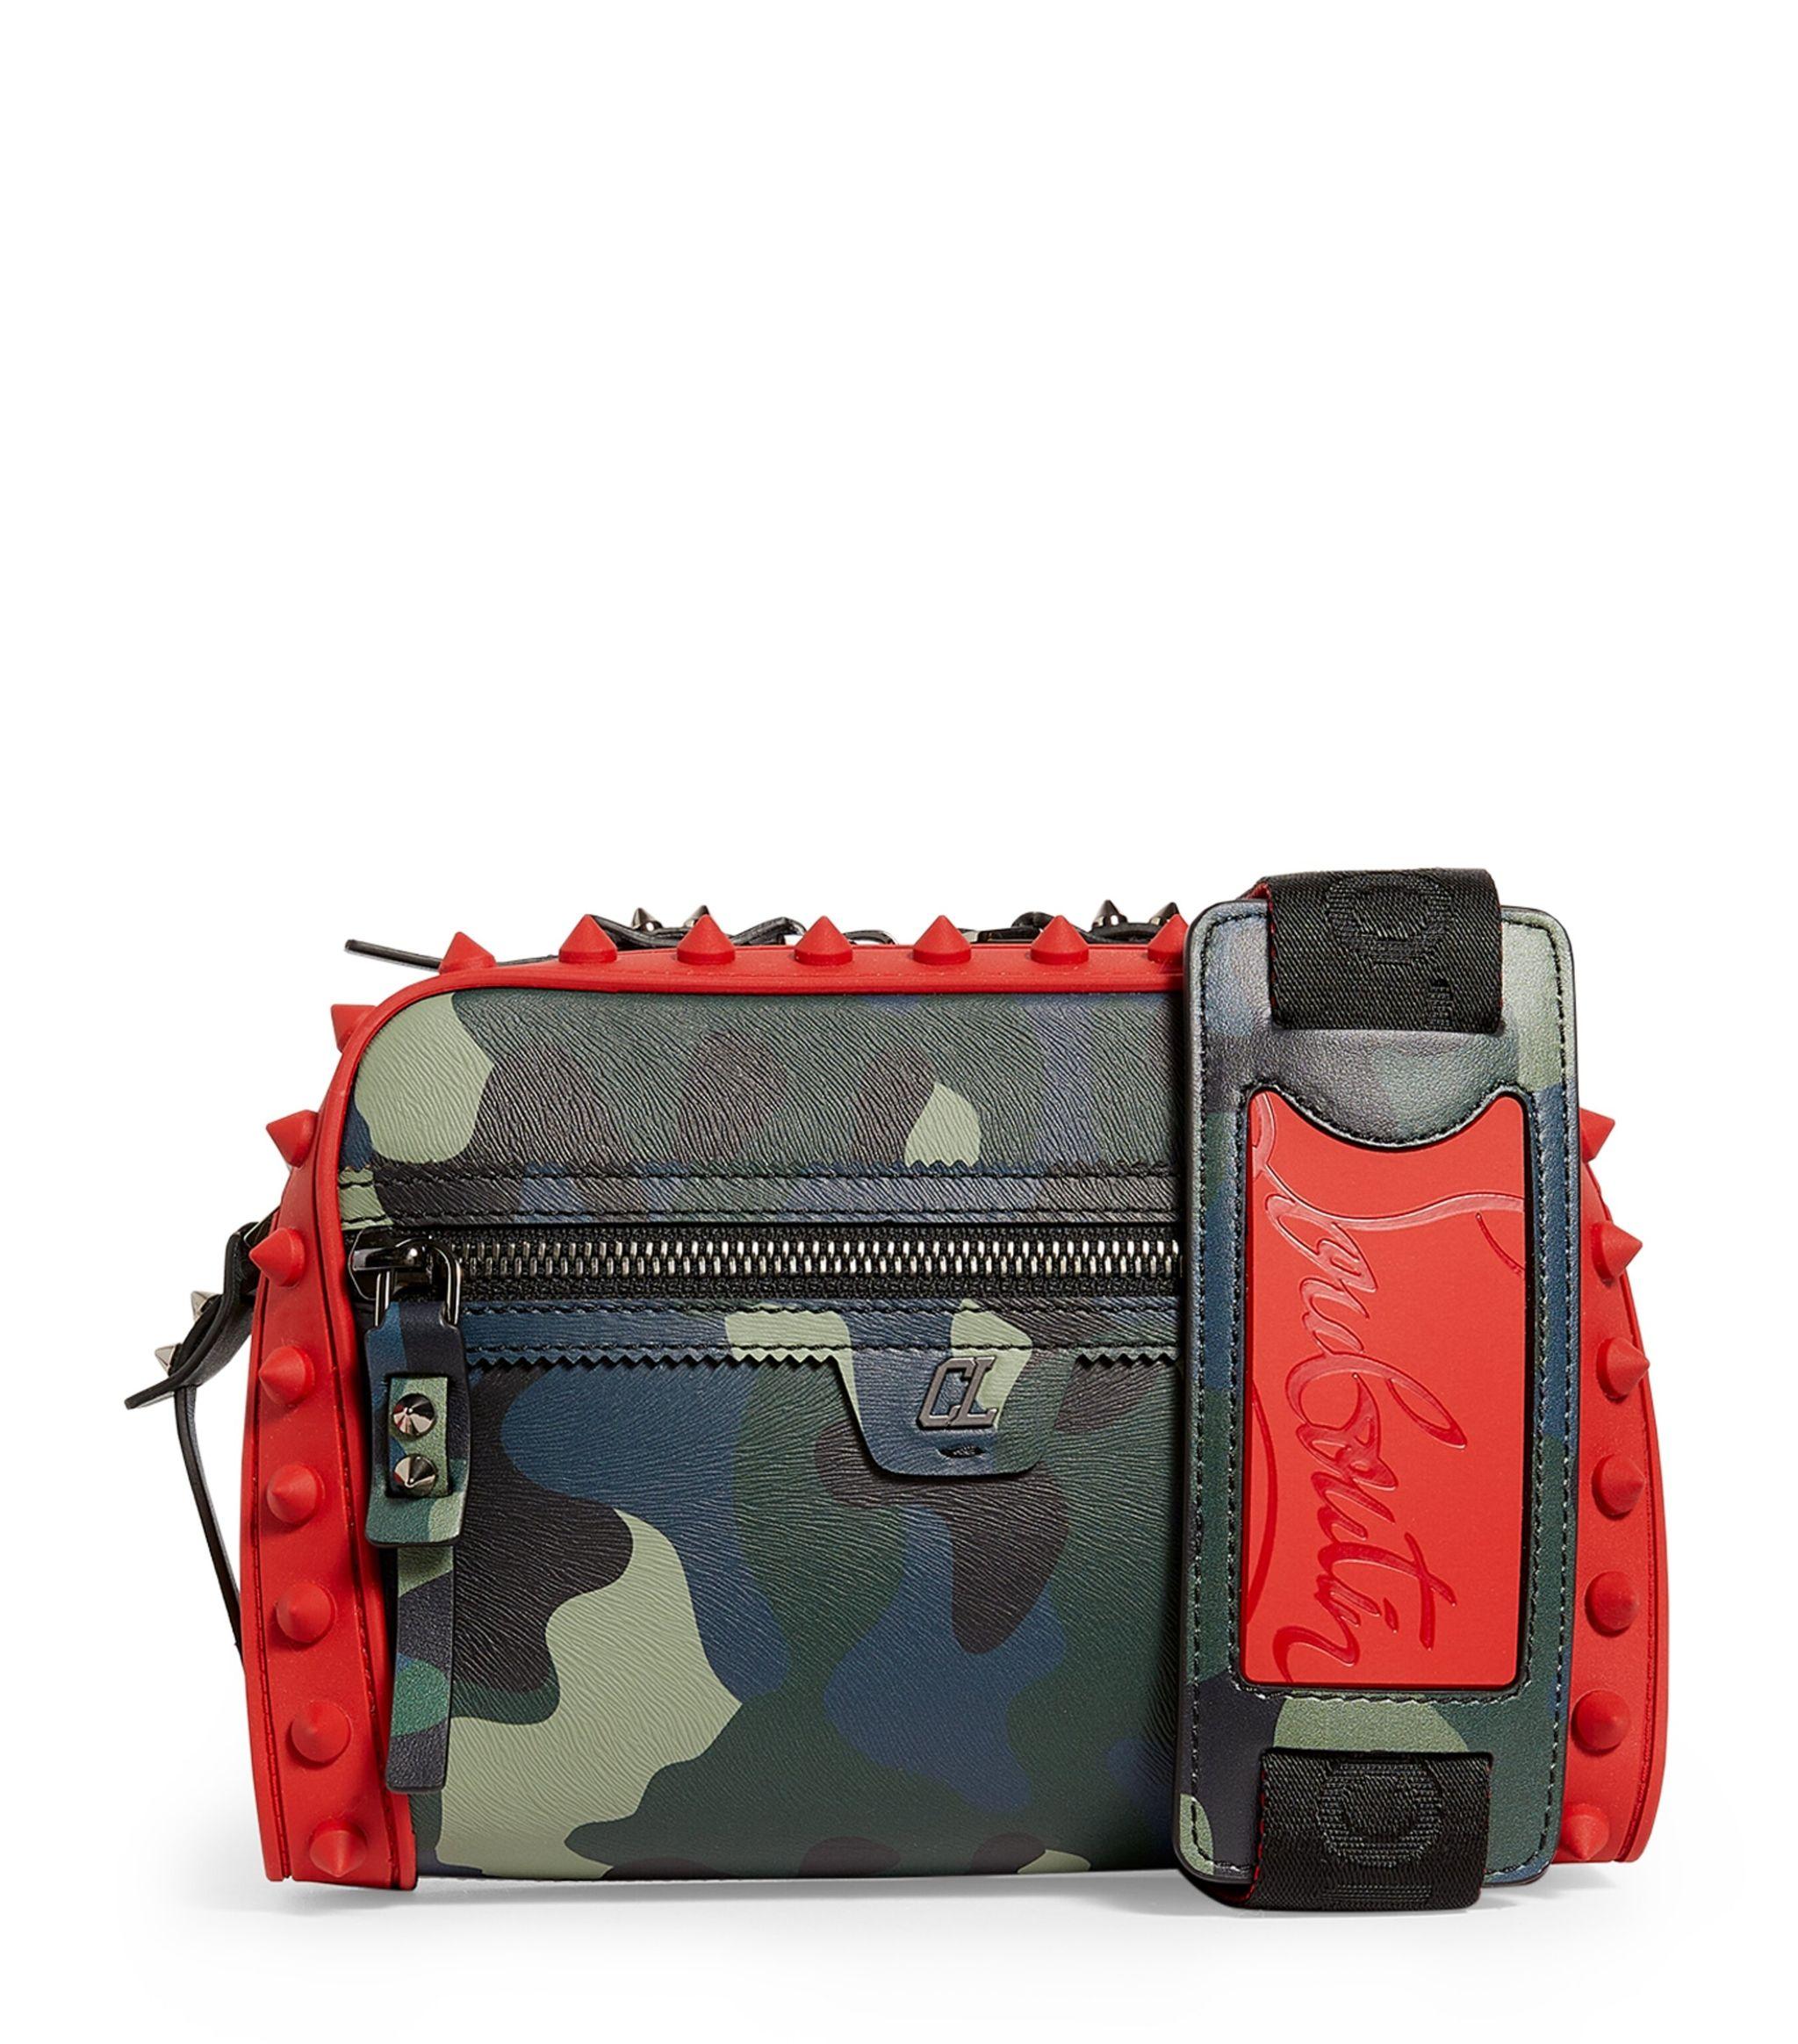 Christian Louboutin purse Pantone studs camouflage Zip Around